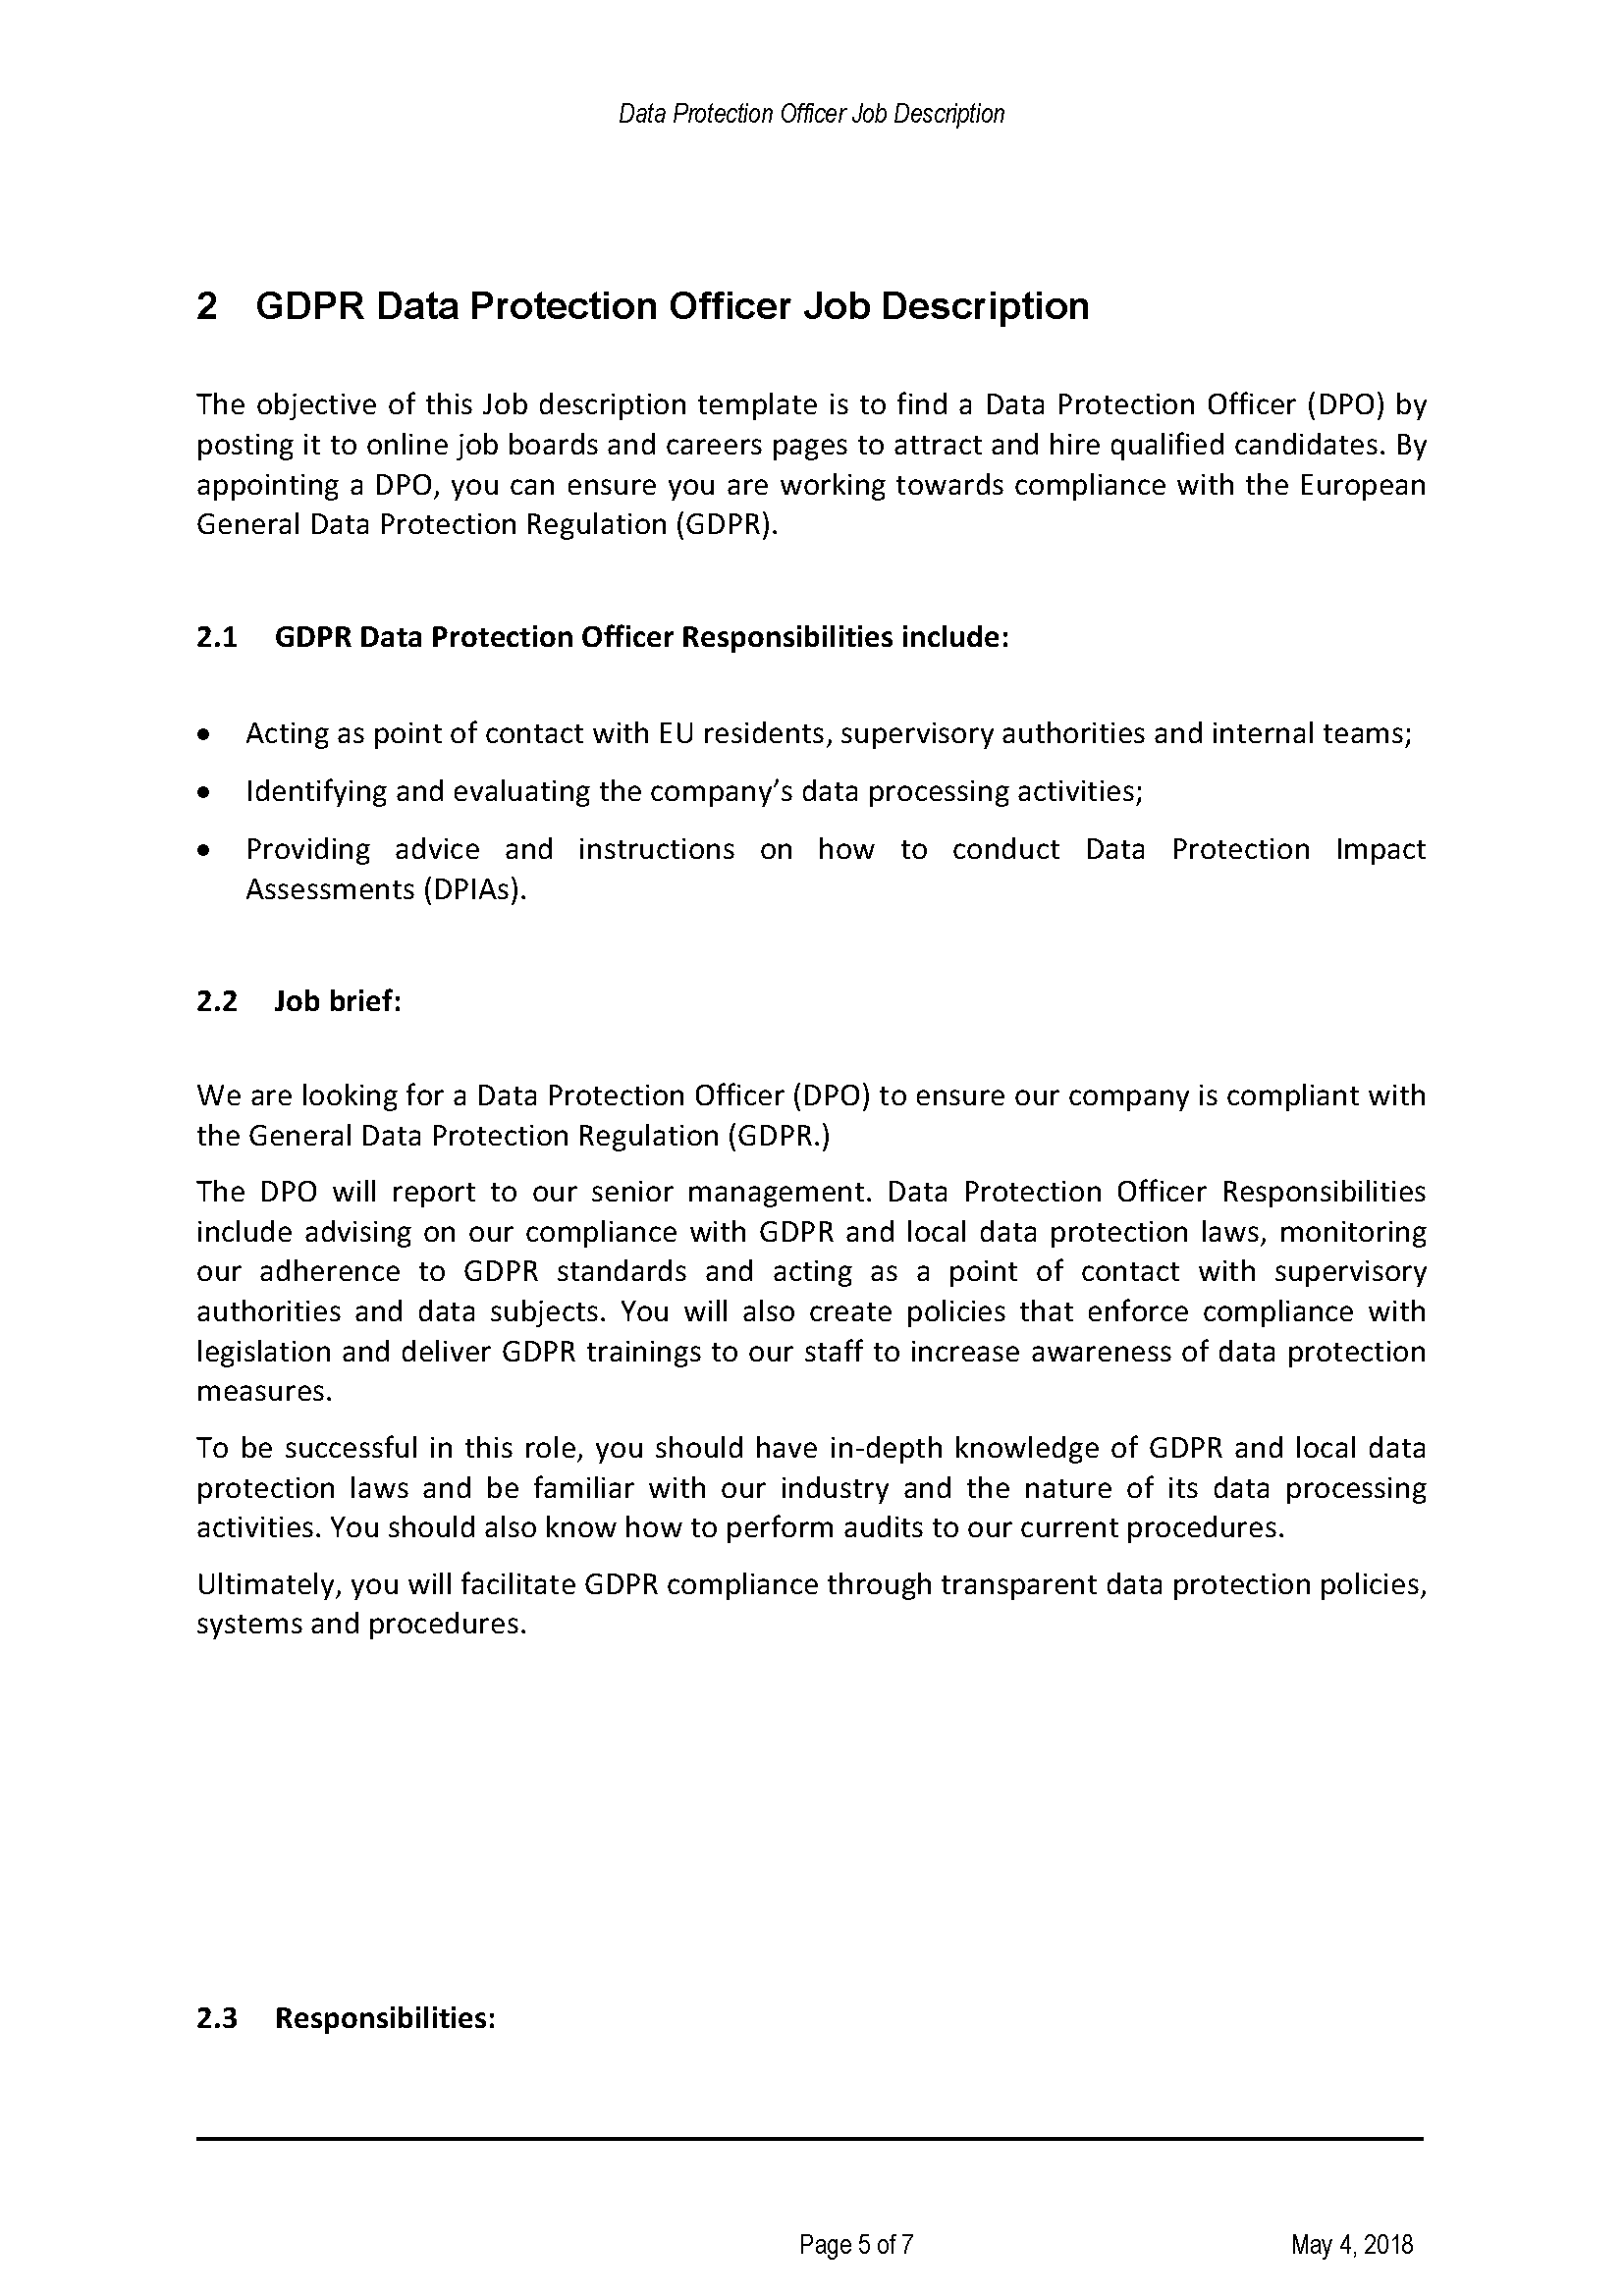 GDPR Data Protection Officer Job Description 模板